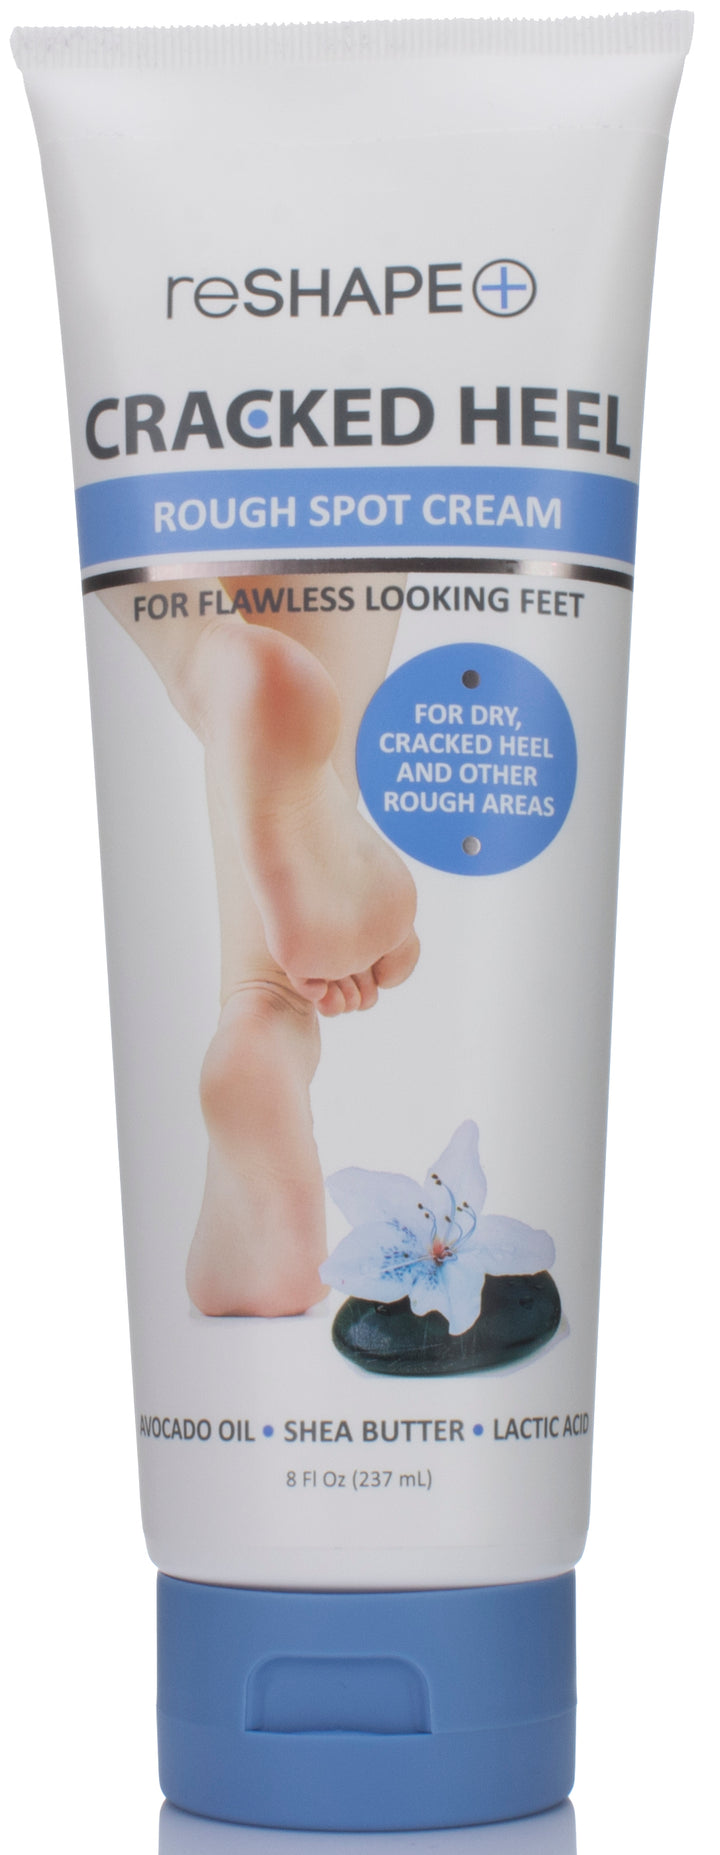 reShape + Cracked Heel Rough Spot Cream for Feet 8 Fl Oz - Pure Valley 